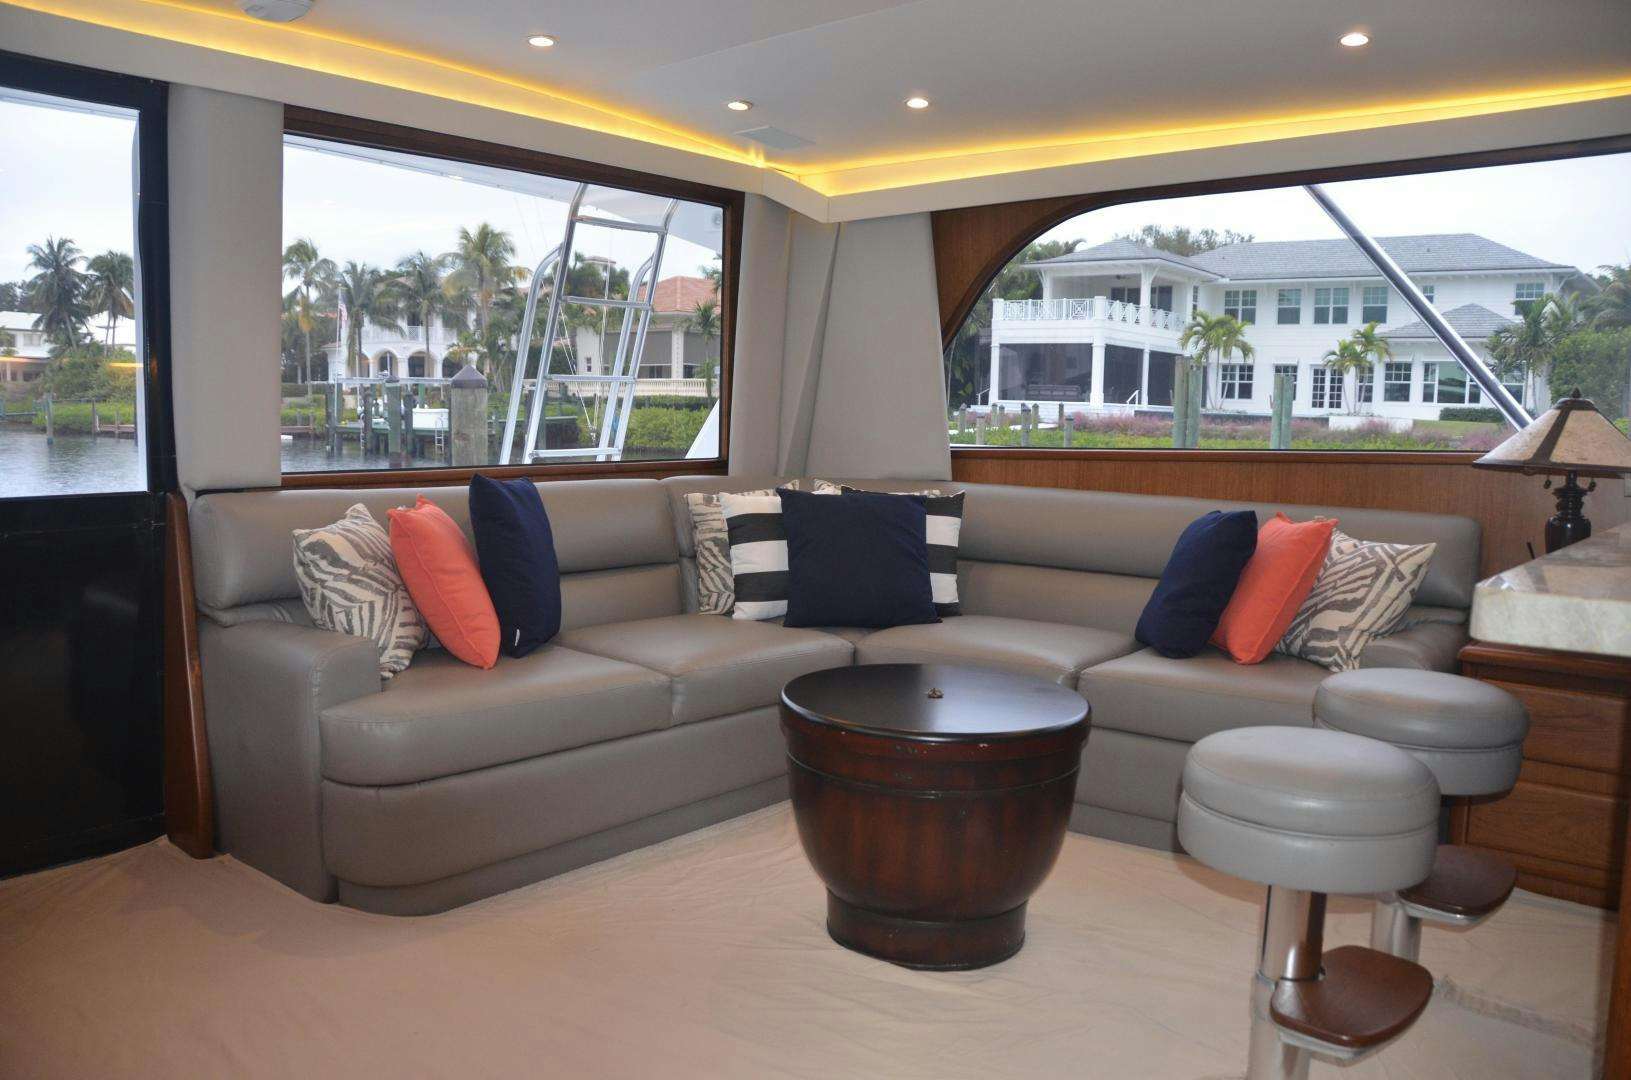 La trinita
Yacht for Sale